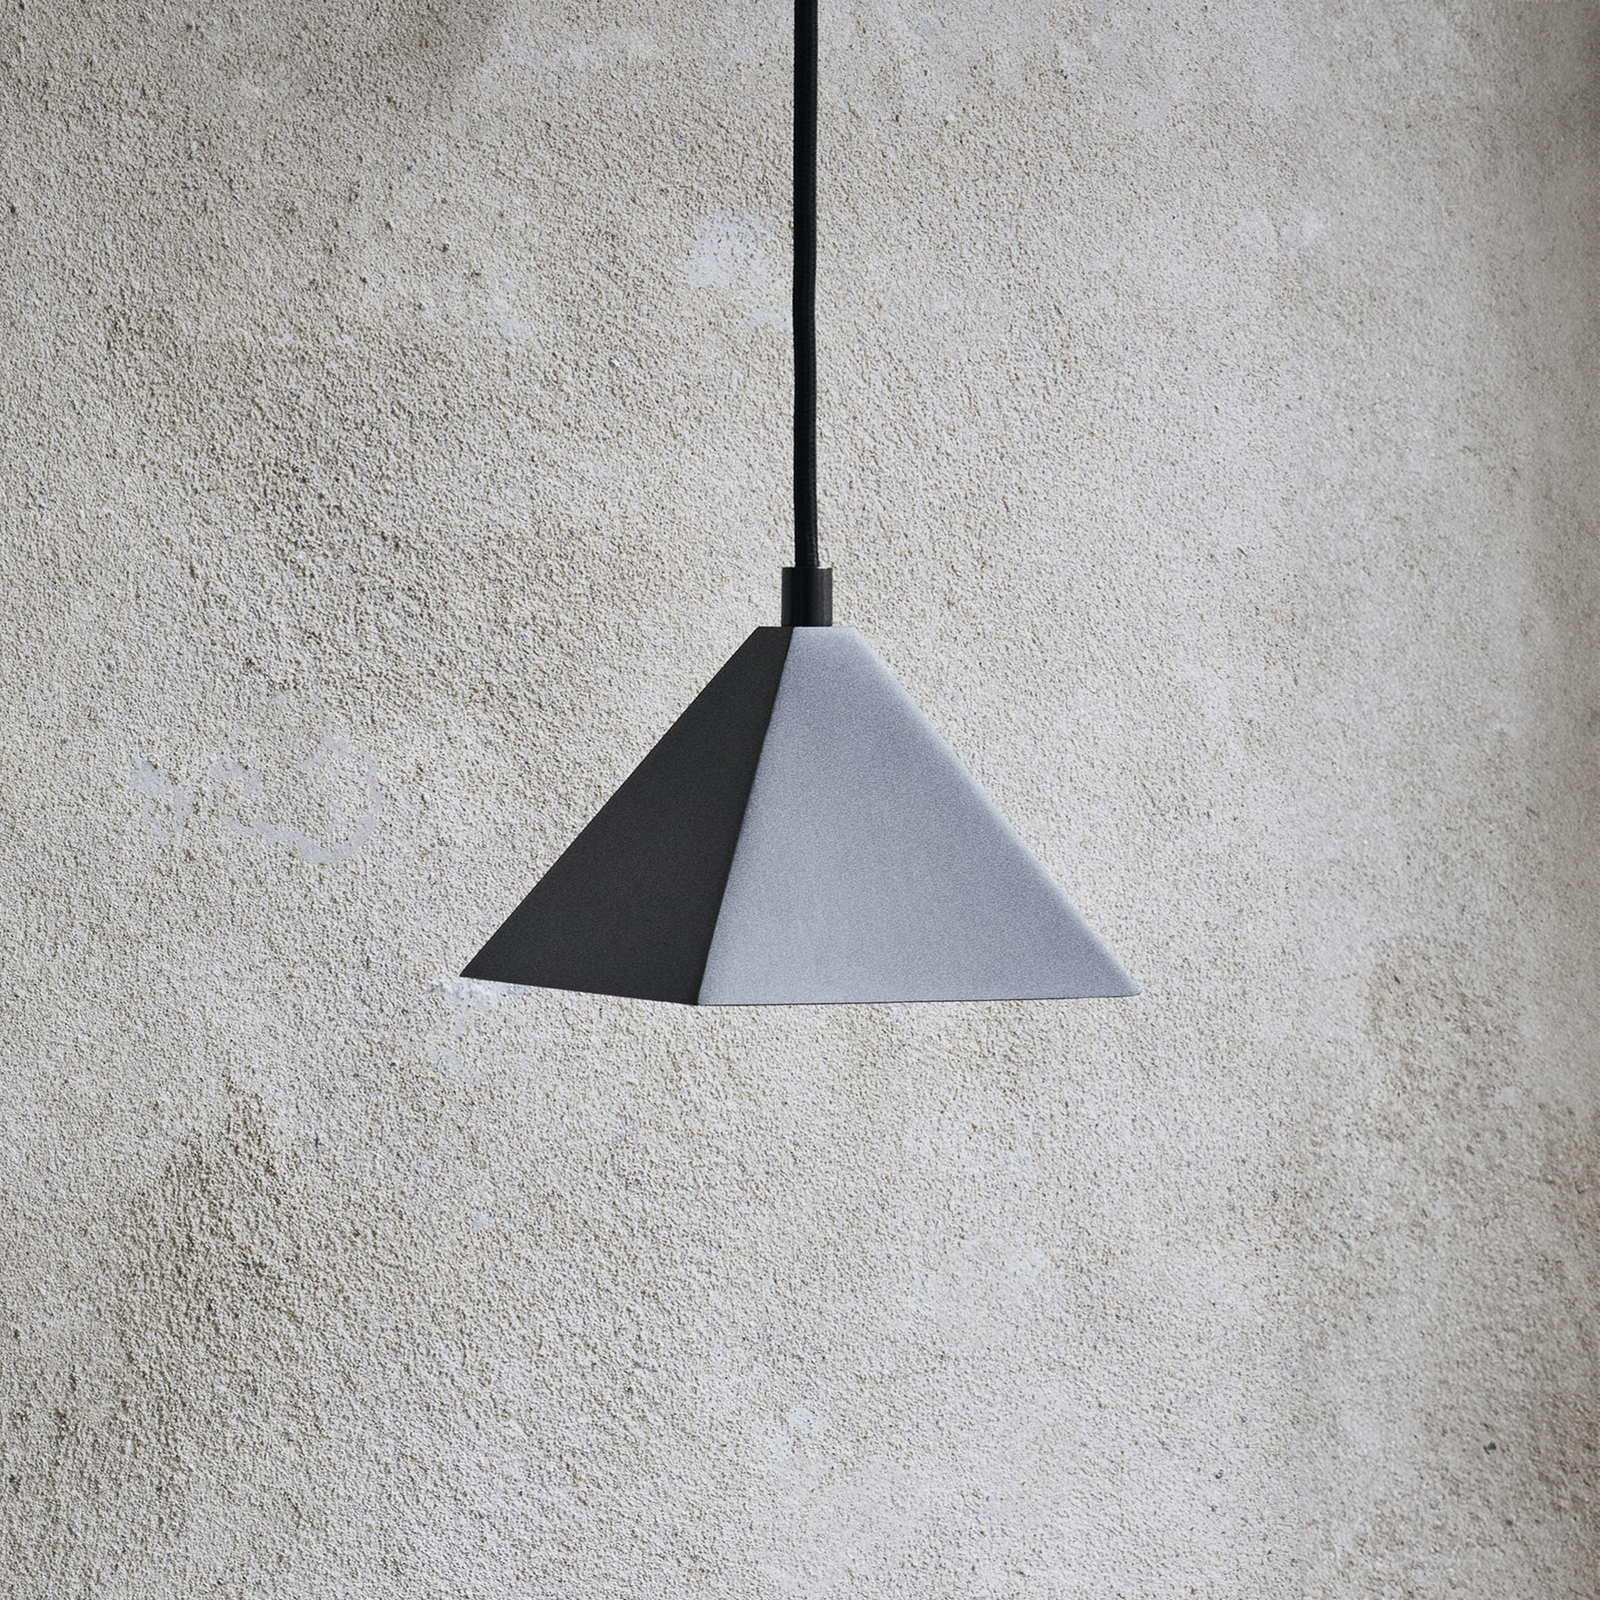 ferm LIVING Kare hanglamp, zwart, roestvrij staal, 12,5 cm